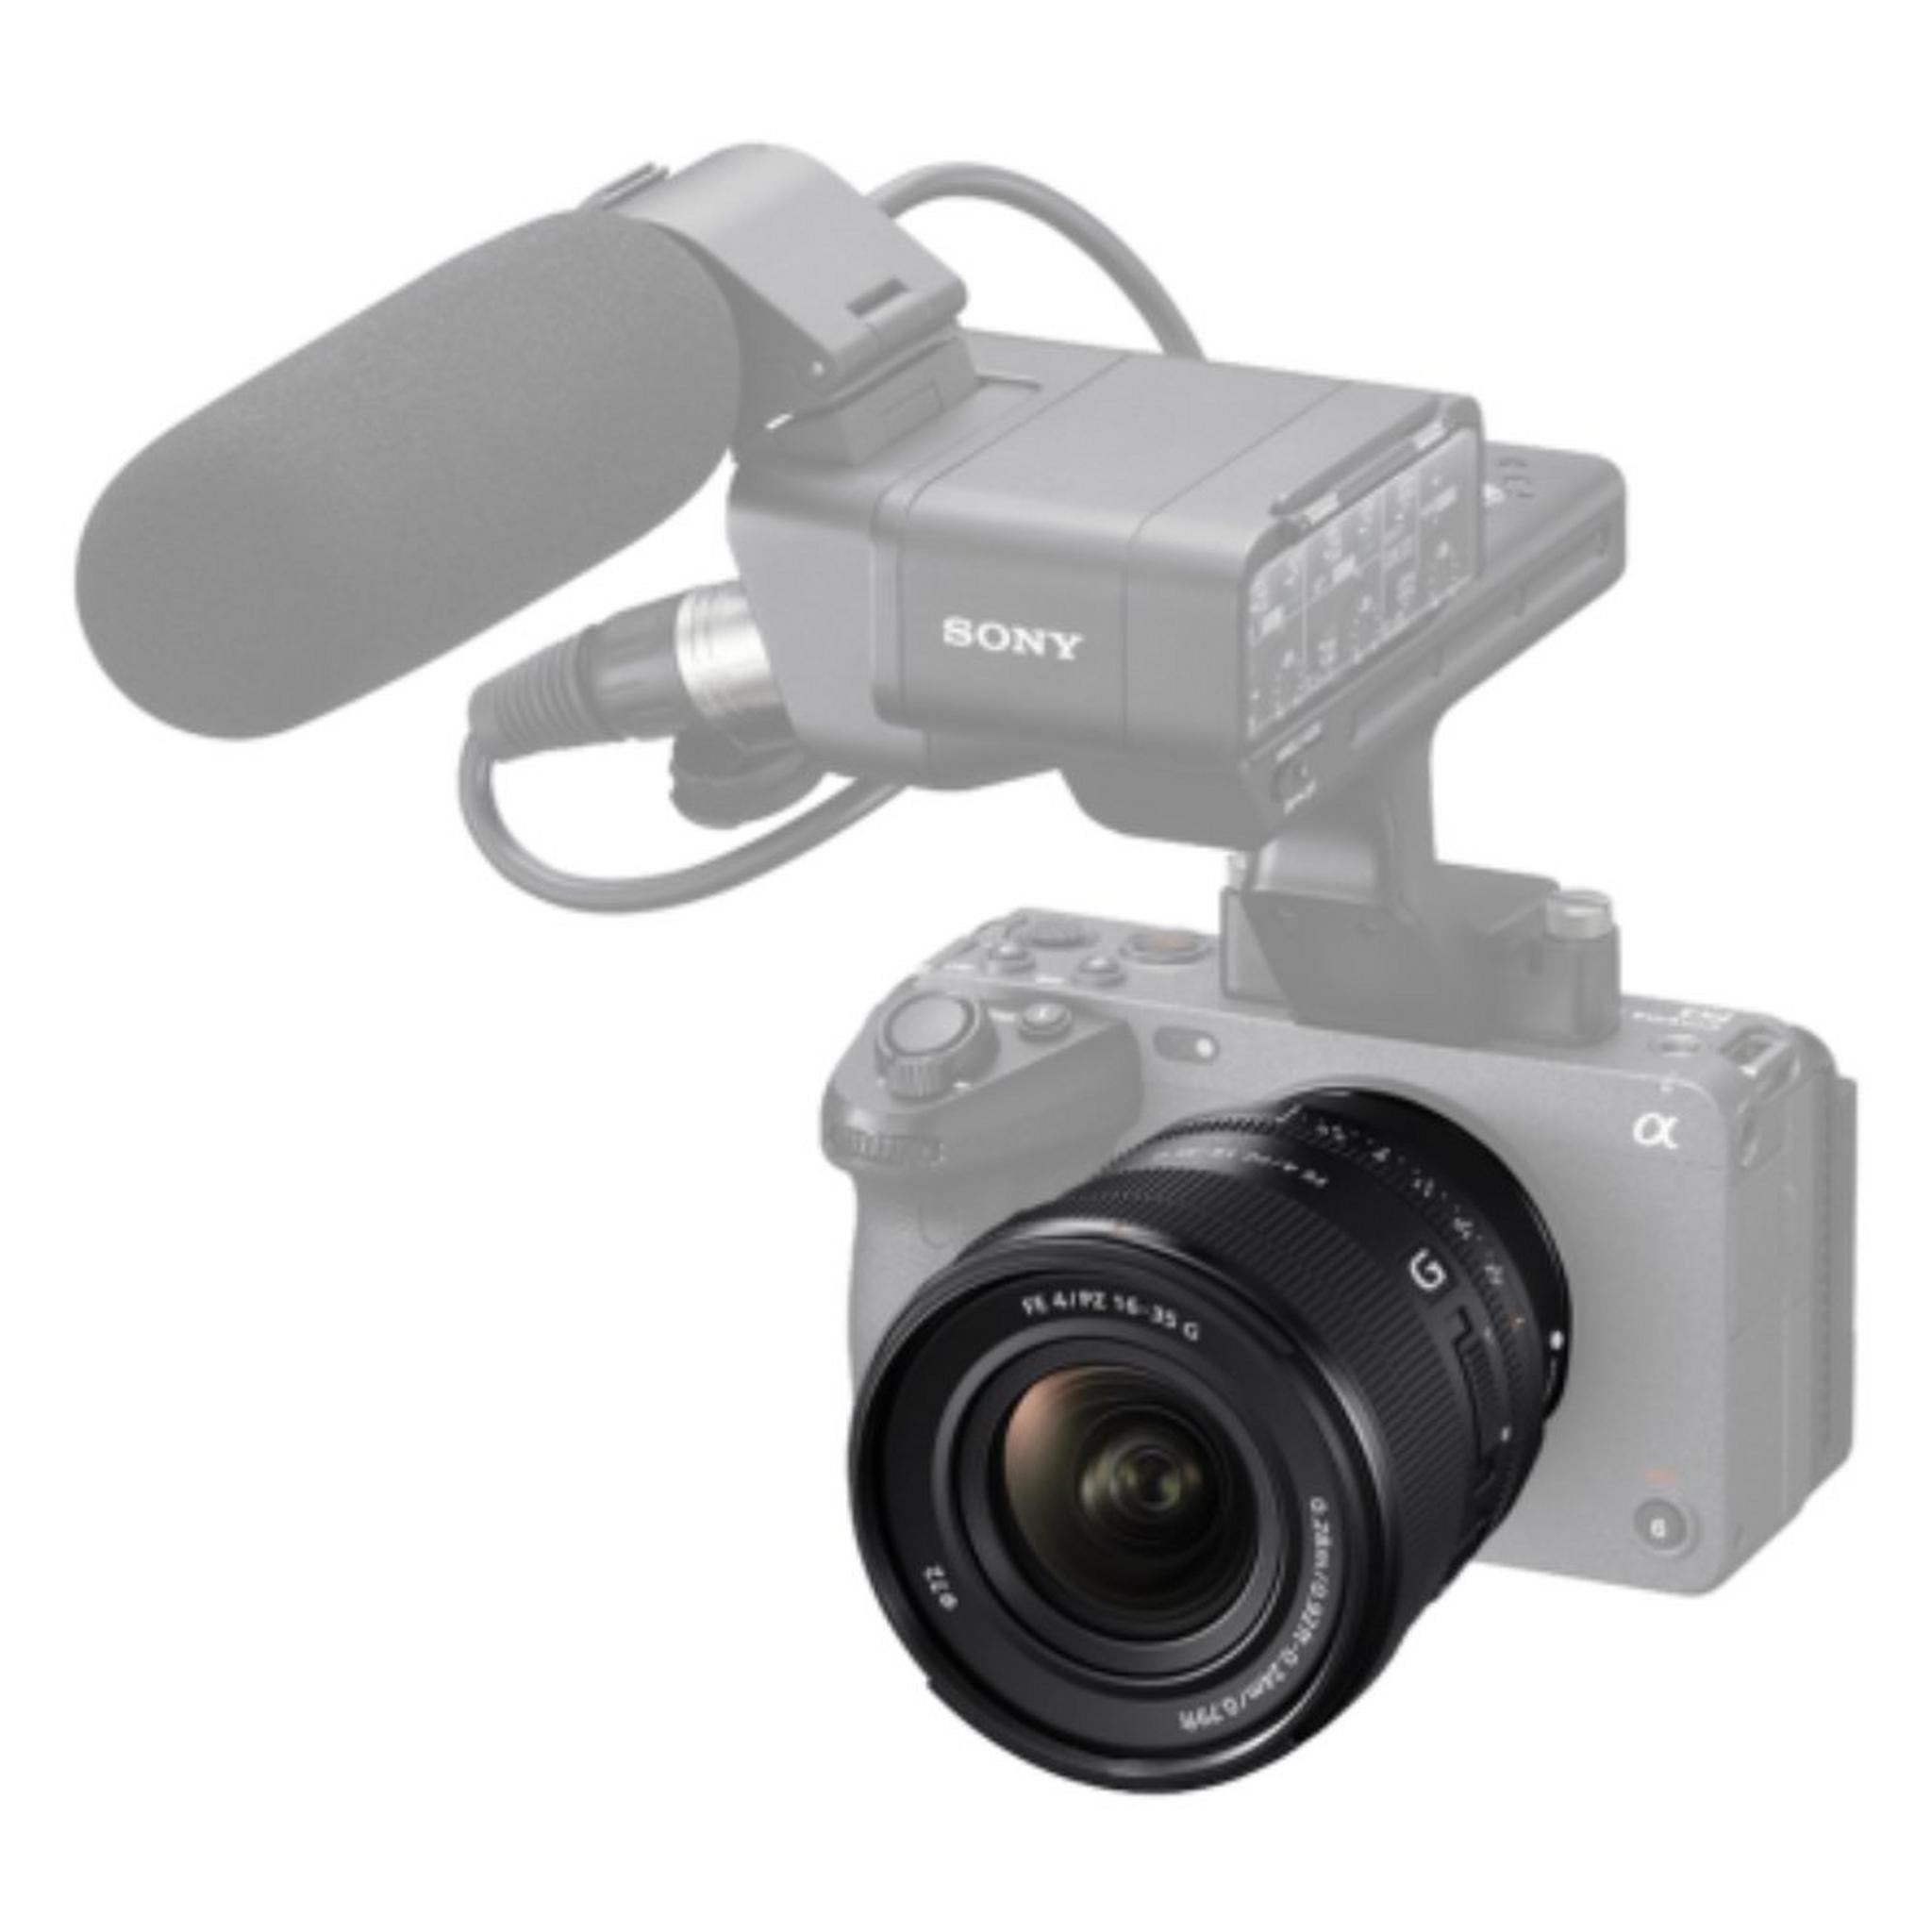 Sony DSC-QX100 Digital Camera Module for Smartphones